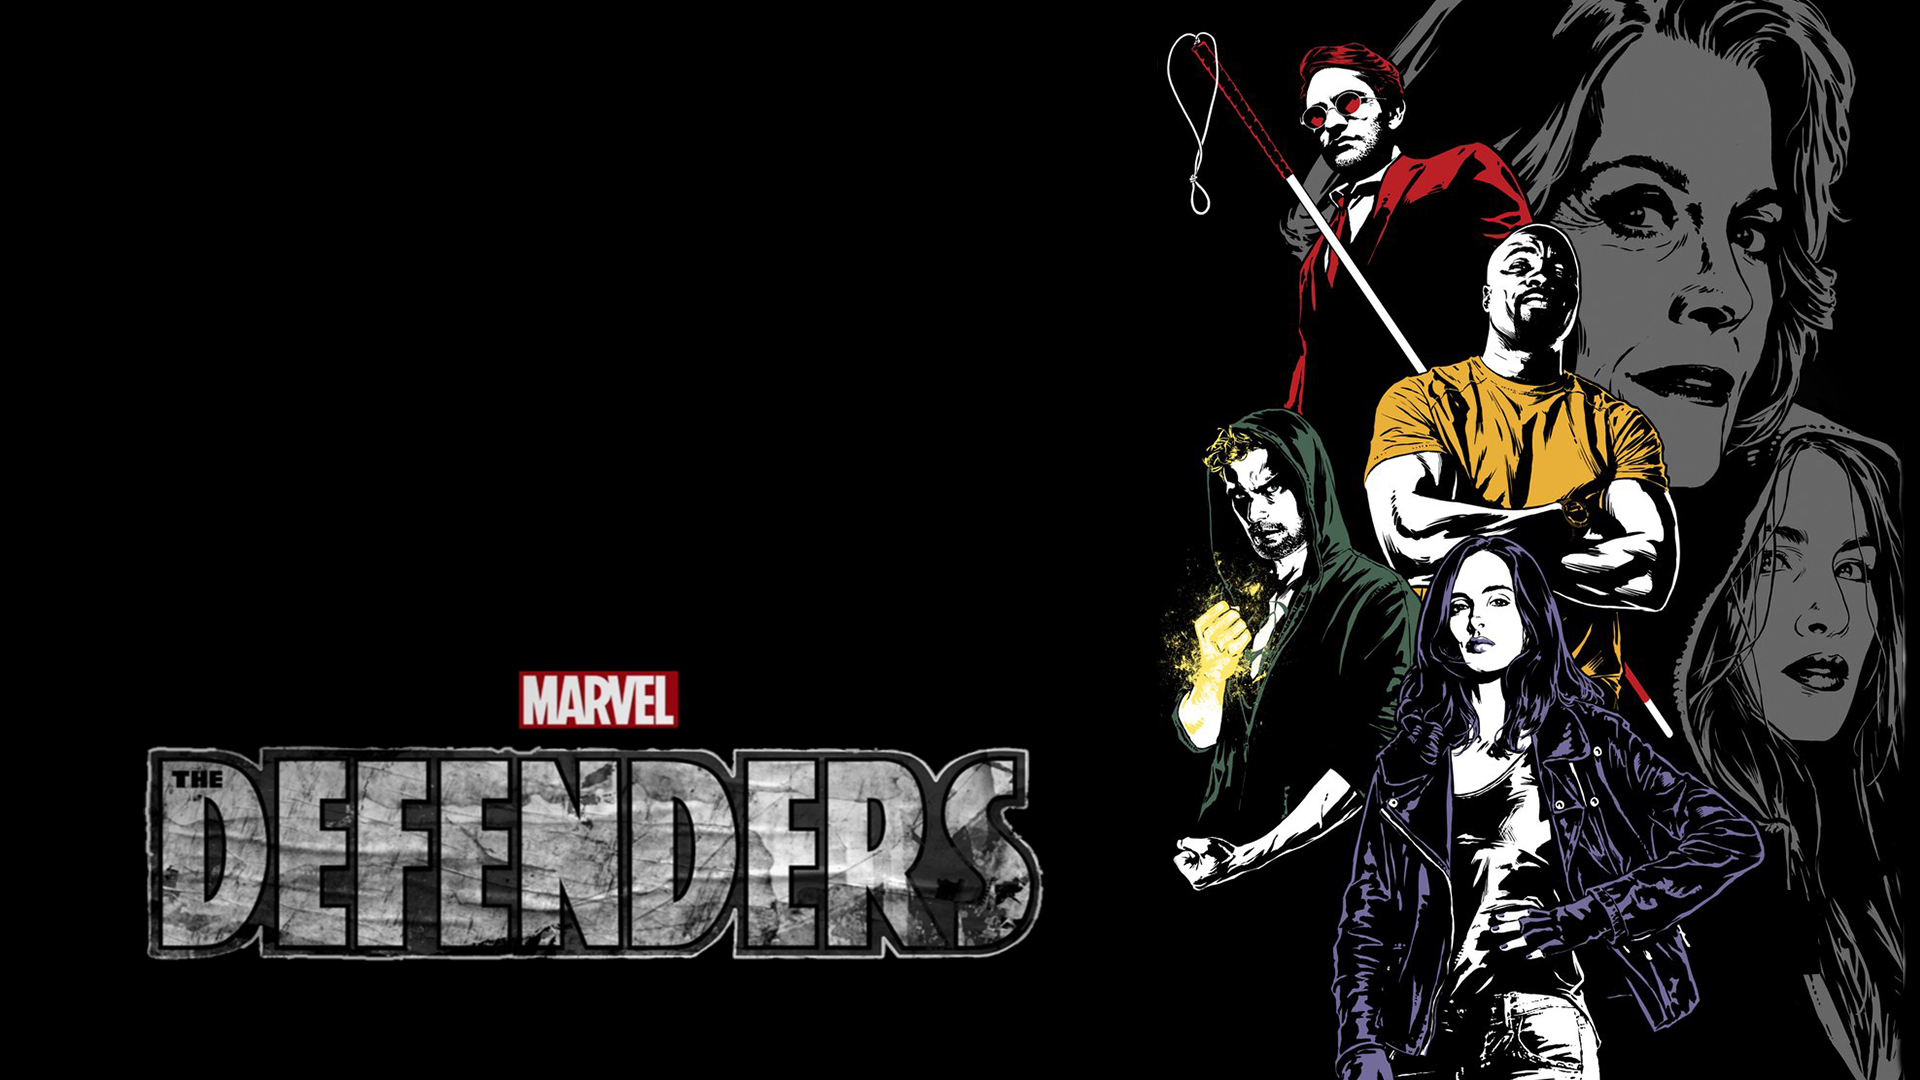 Marvel's The Defenders wallpaper by Thekingblader995 on DeviantArt